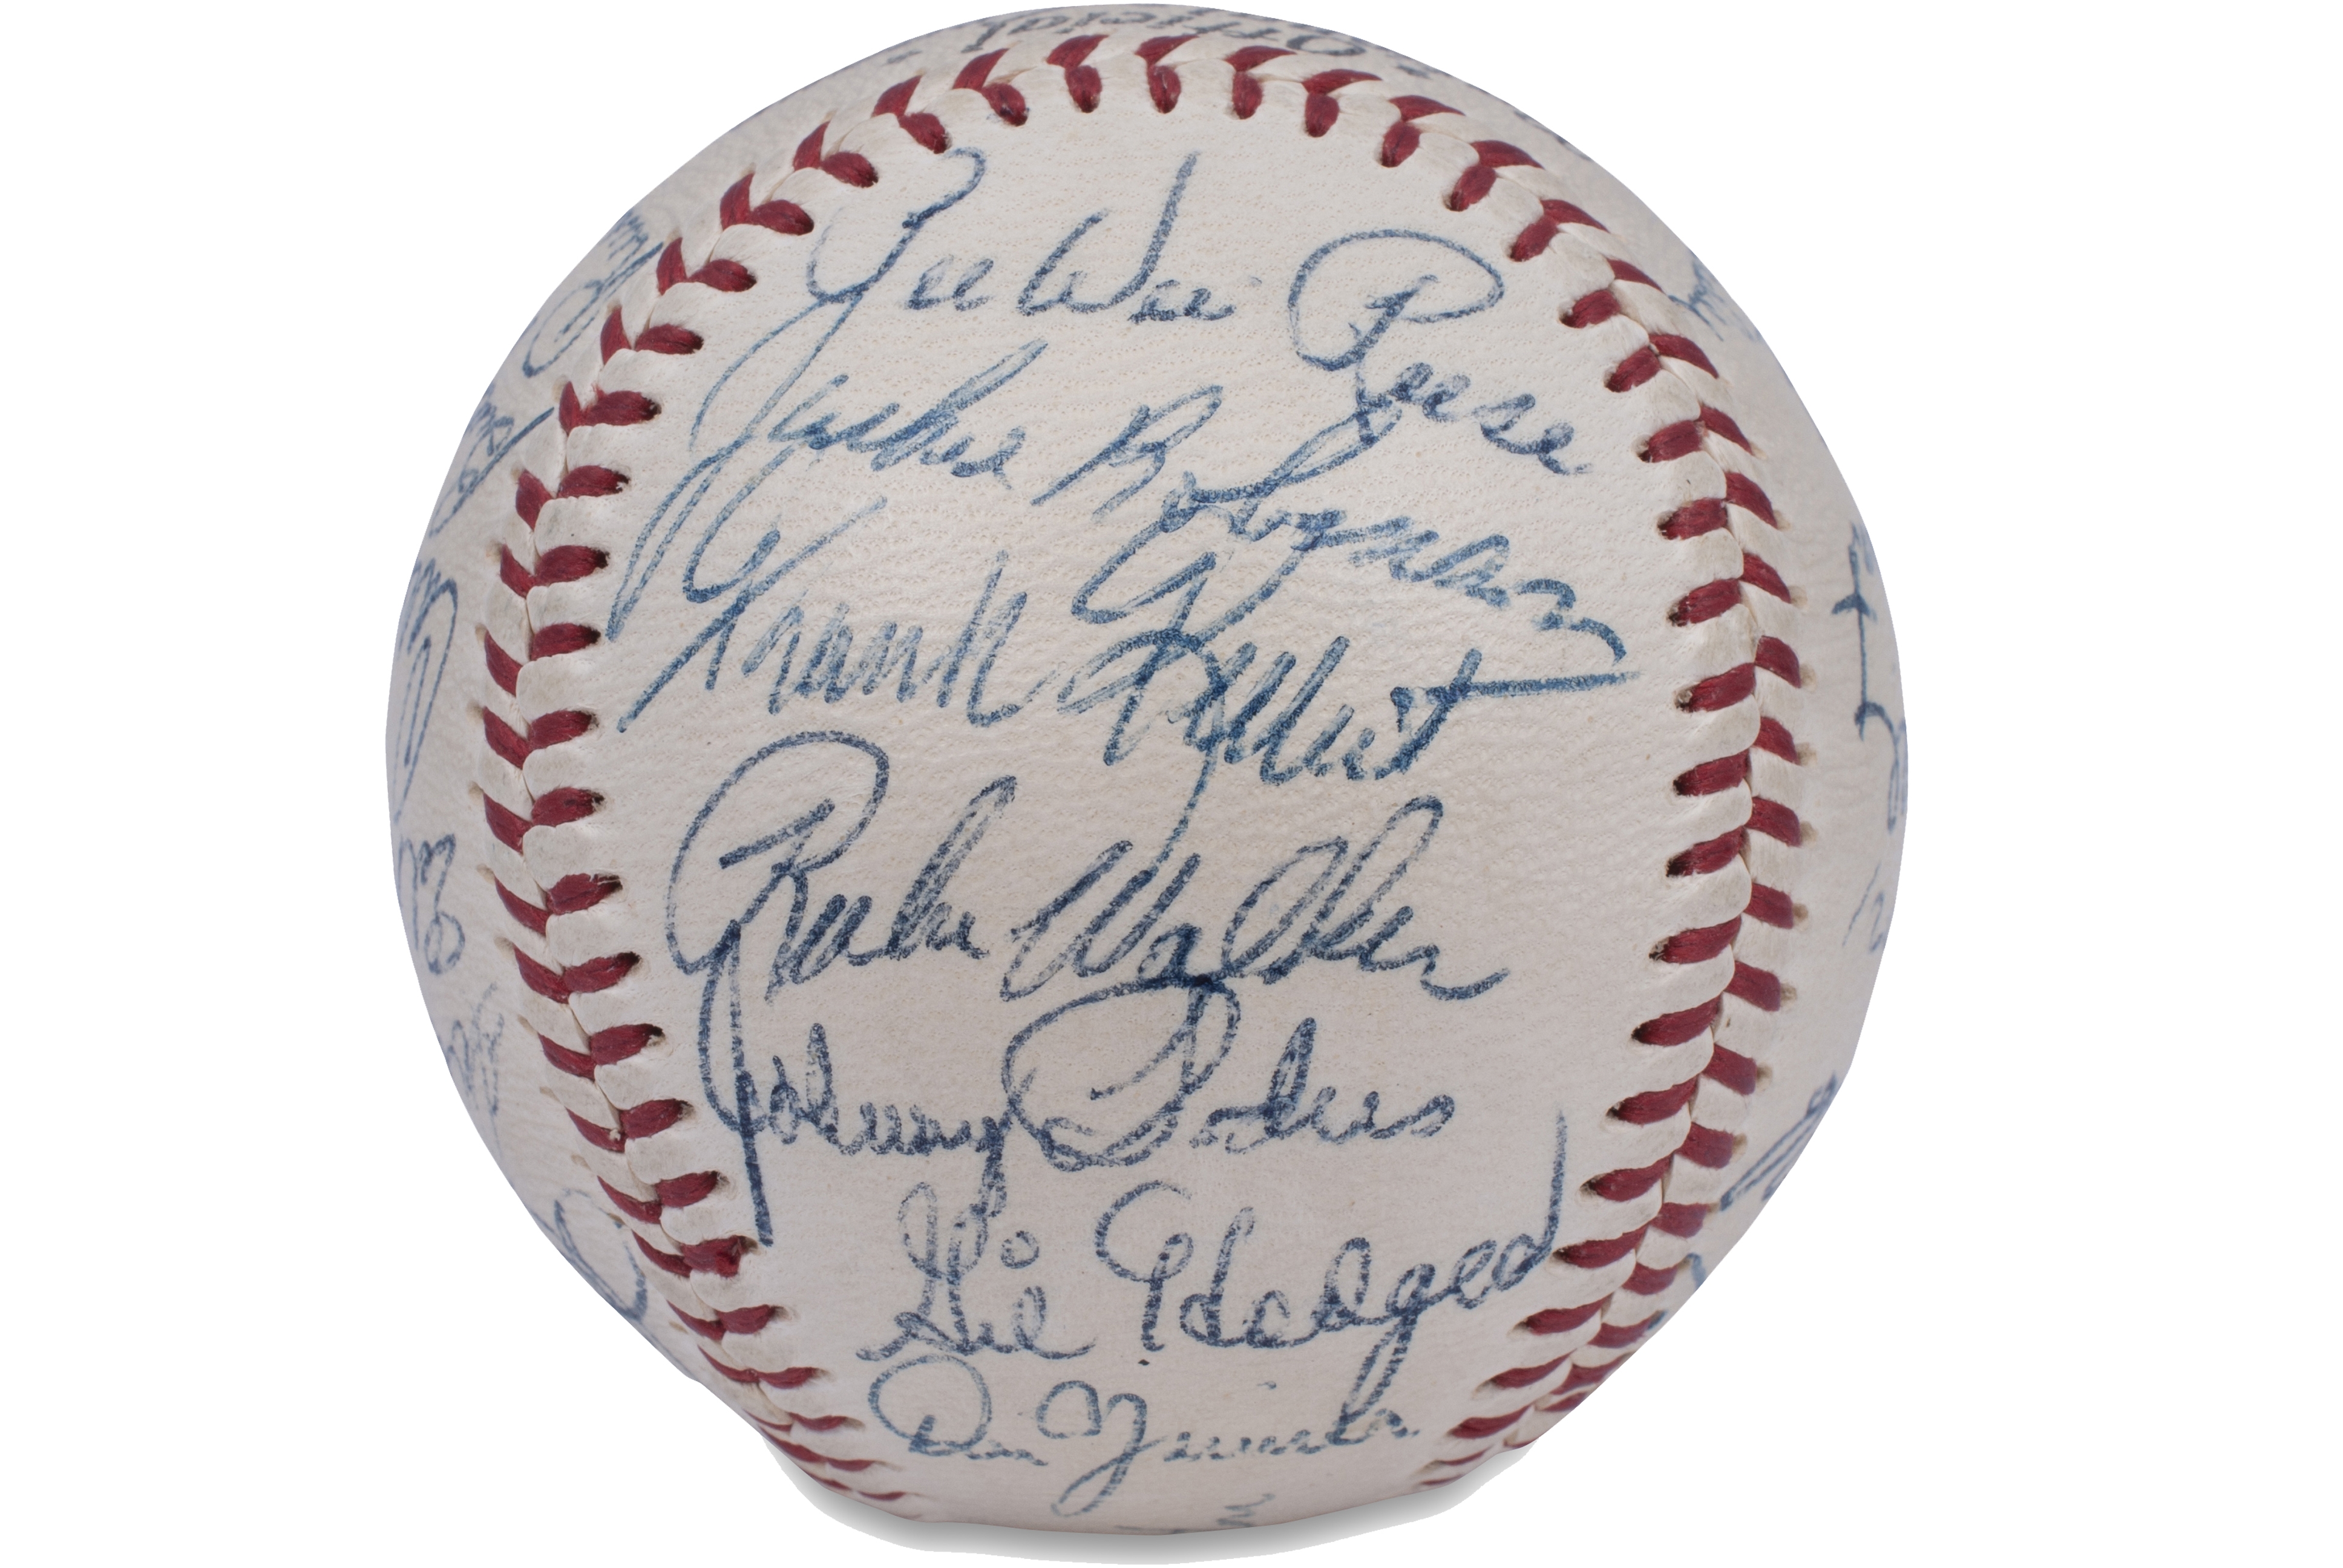 Autographed Roy Campanella Baseball - Beautiful 1955 Pre